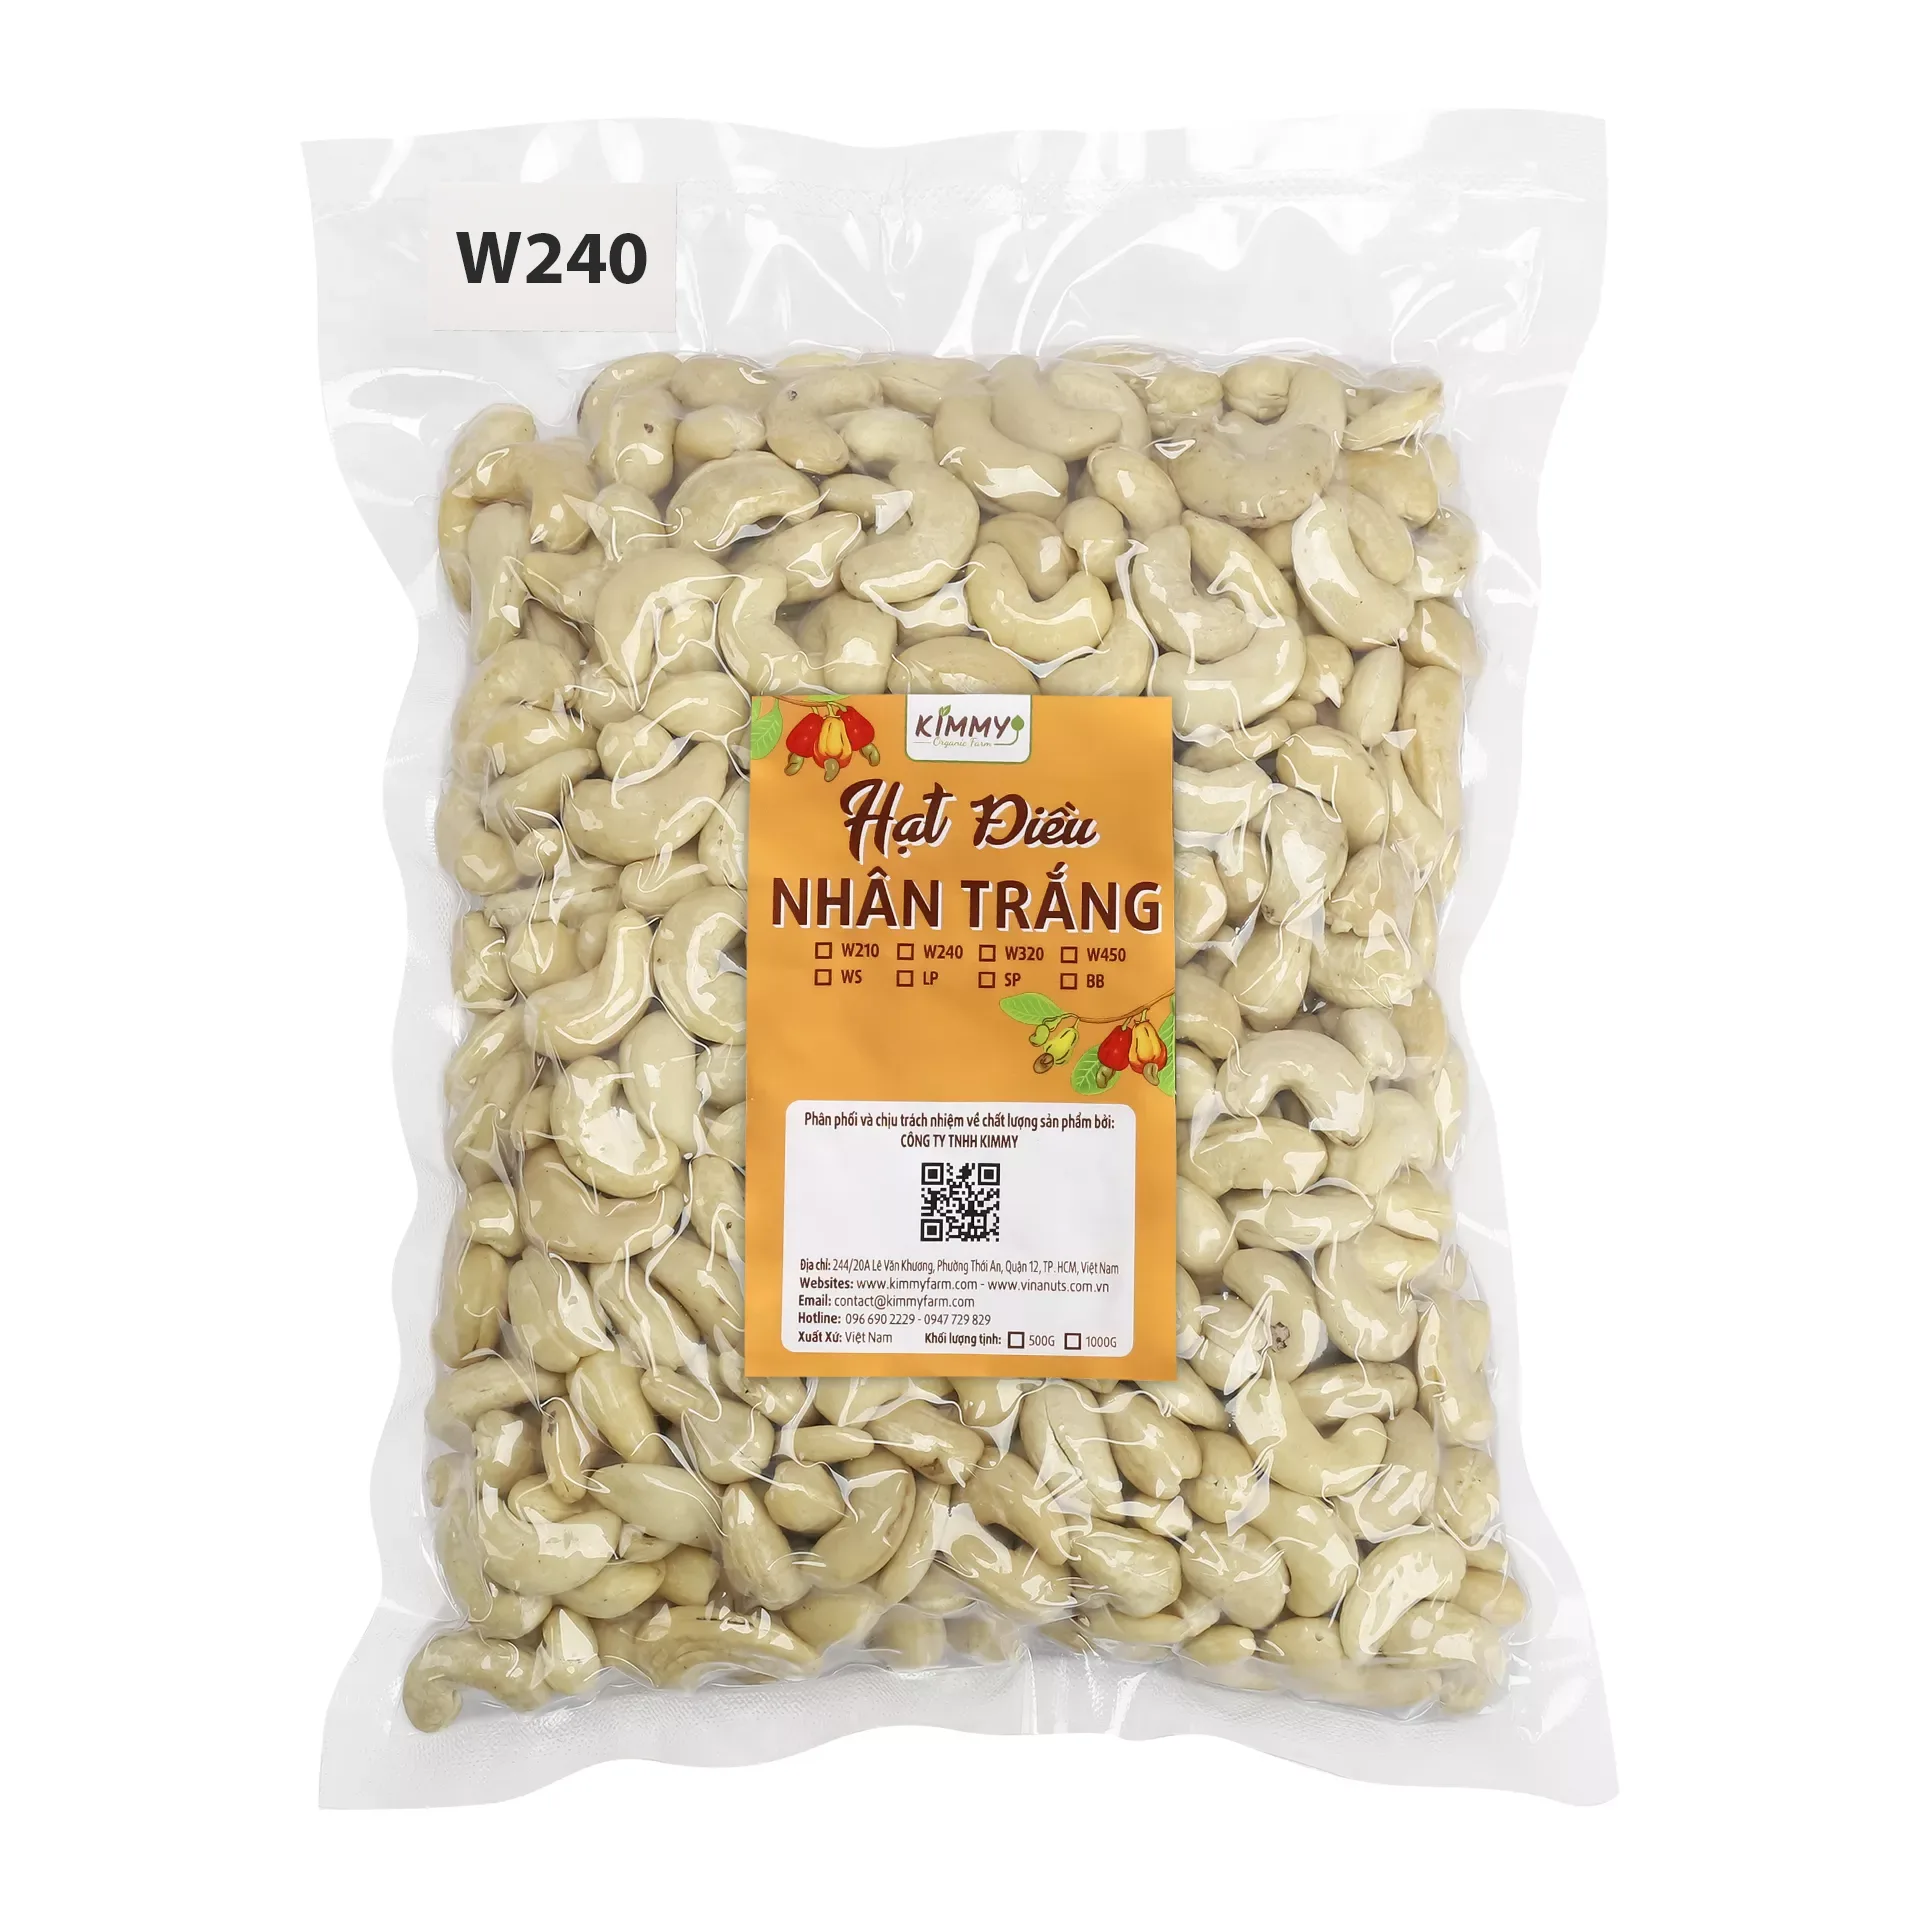 W240 Cashew Nuts 1st Quality (AFI Standard)